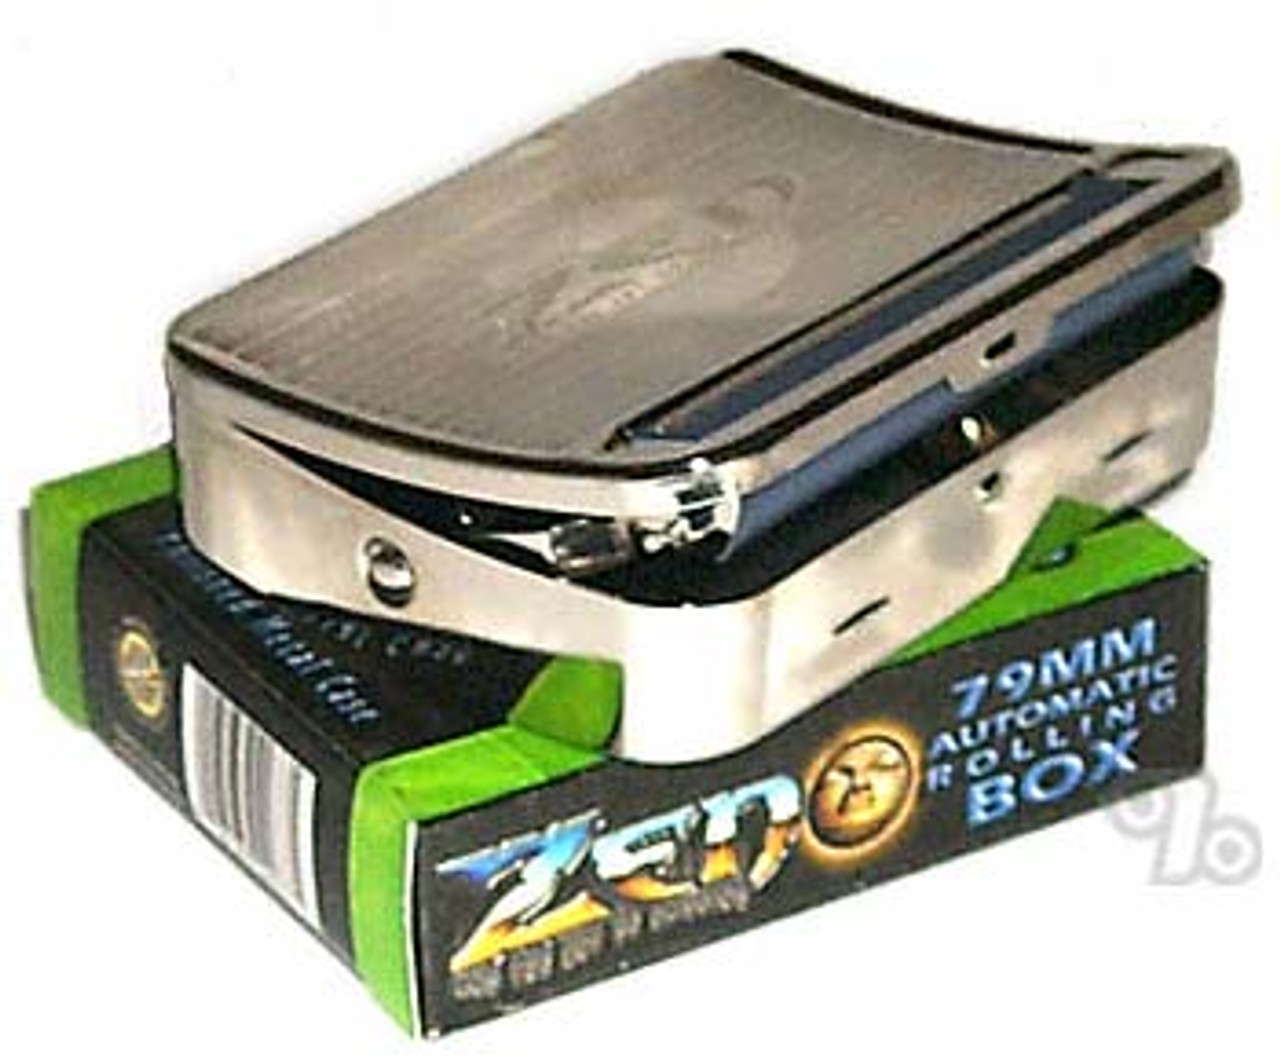 Zen 79mm Auto Rolling Box